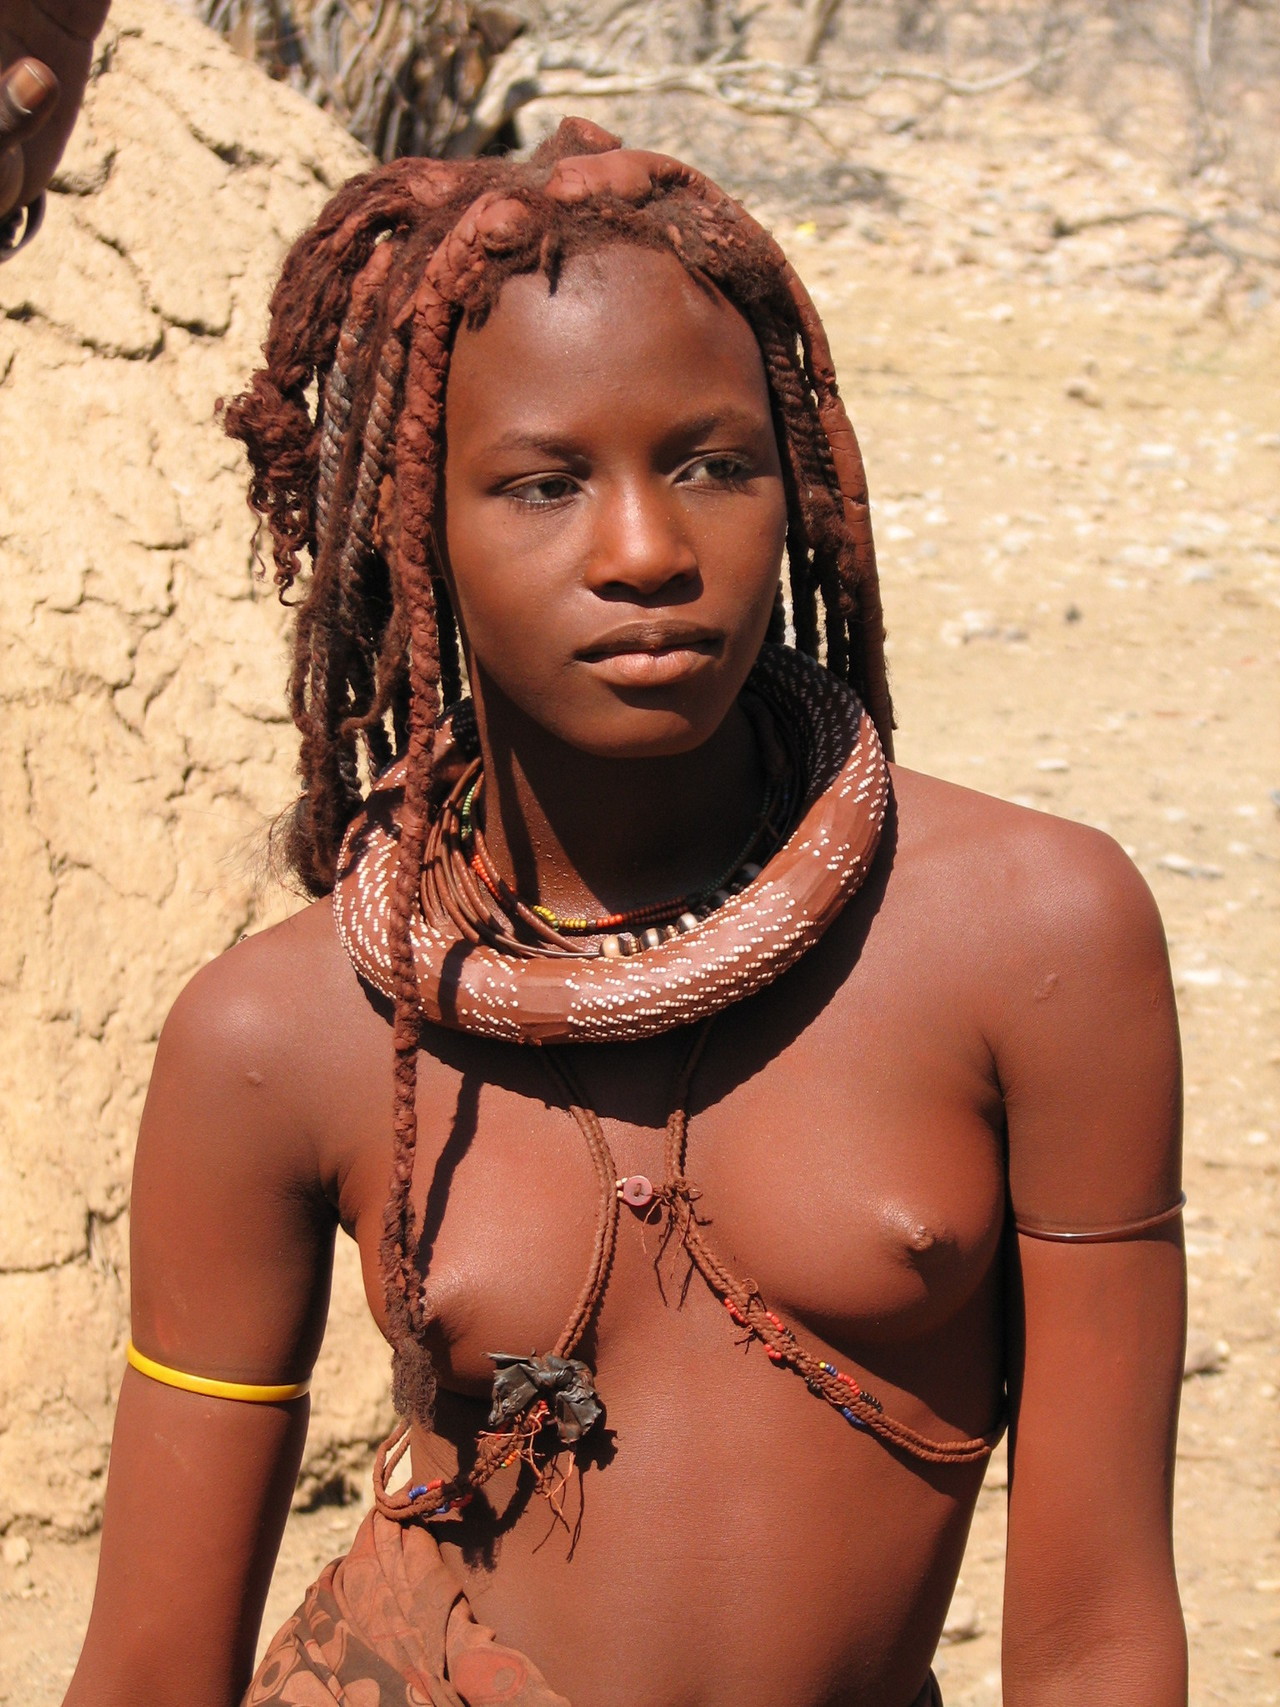 African tribe women sex